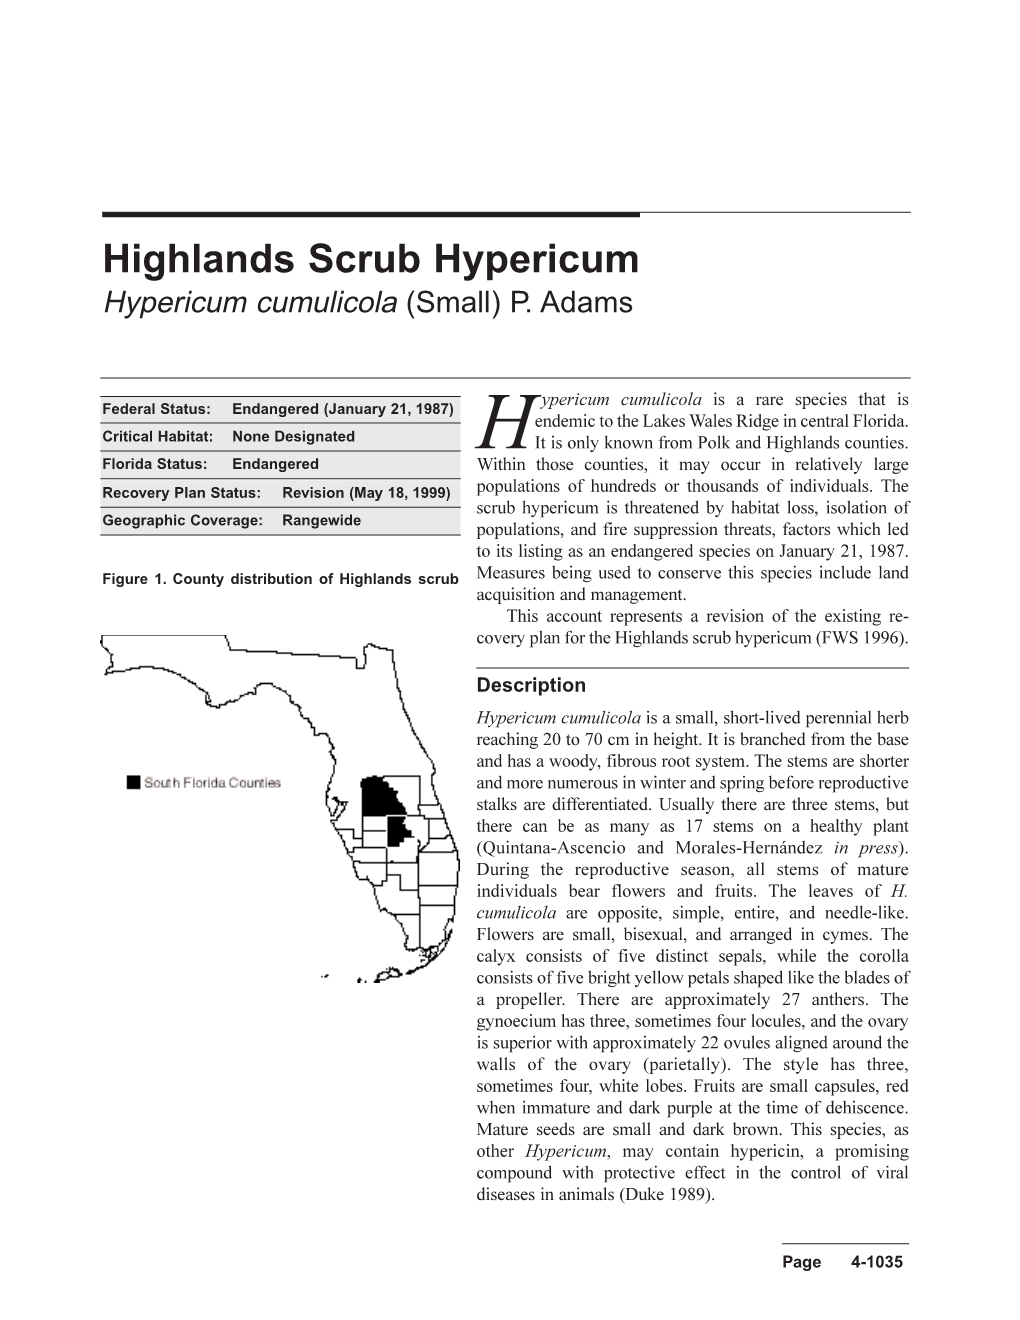 Highlands Scrub Hypericum Hypericum Cumulicola (Small) P